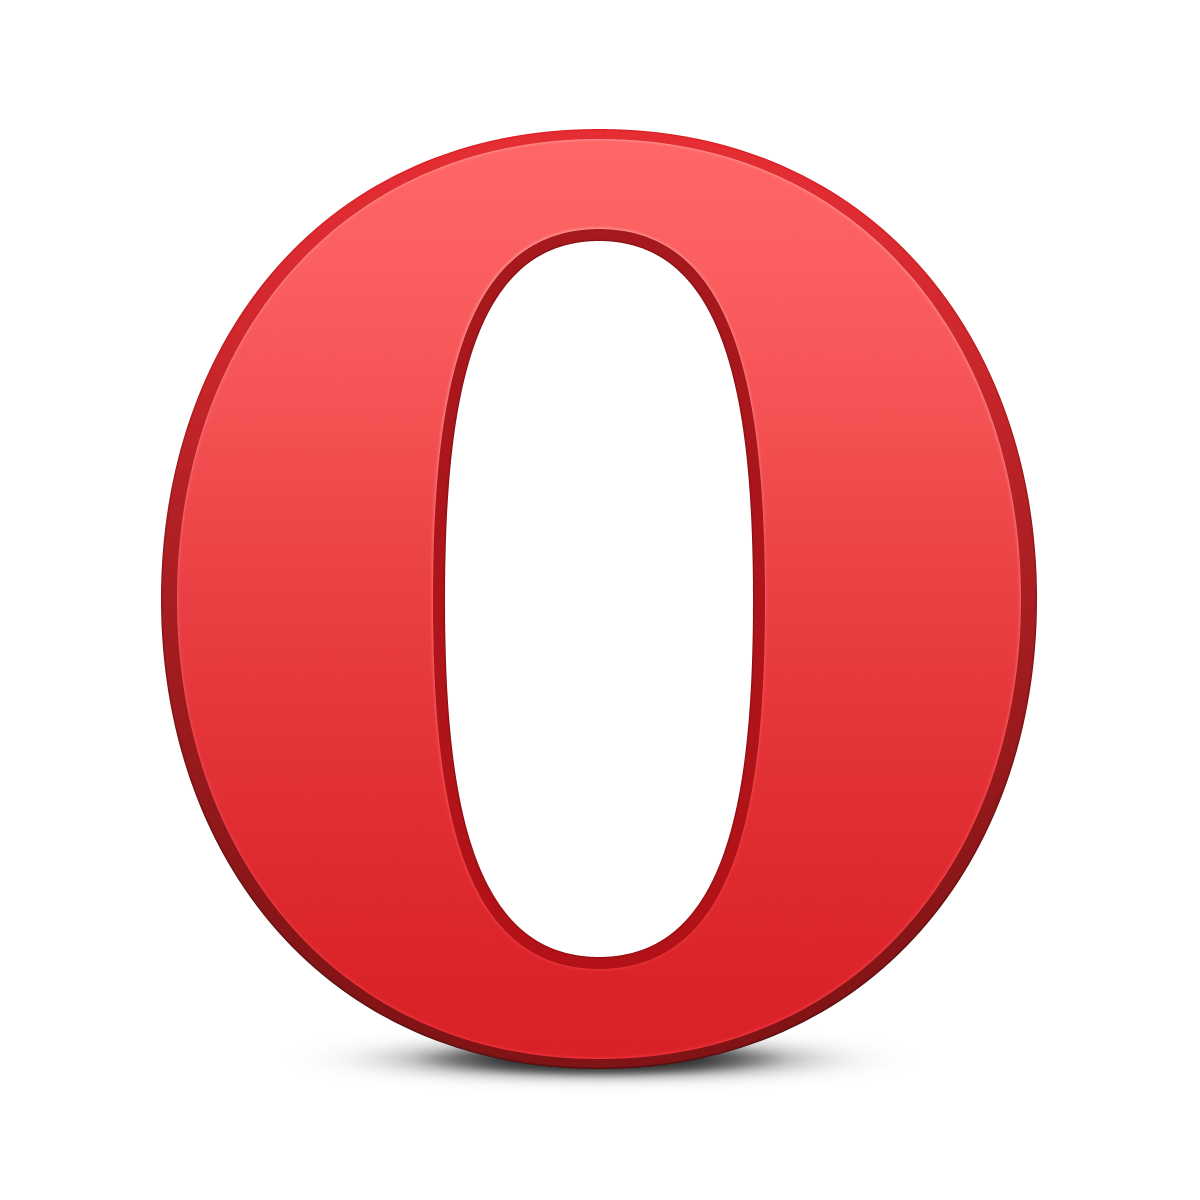 Opera-Browser